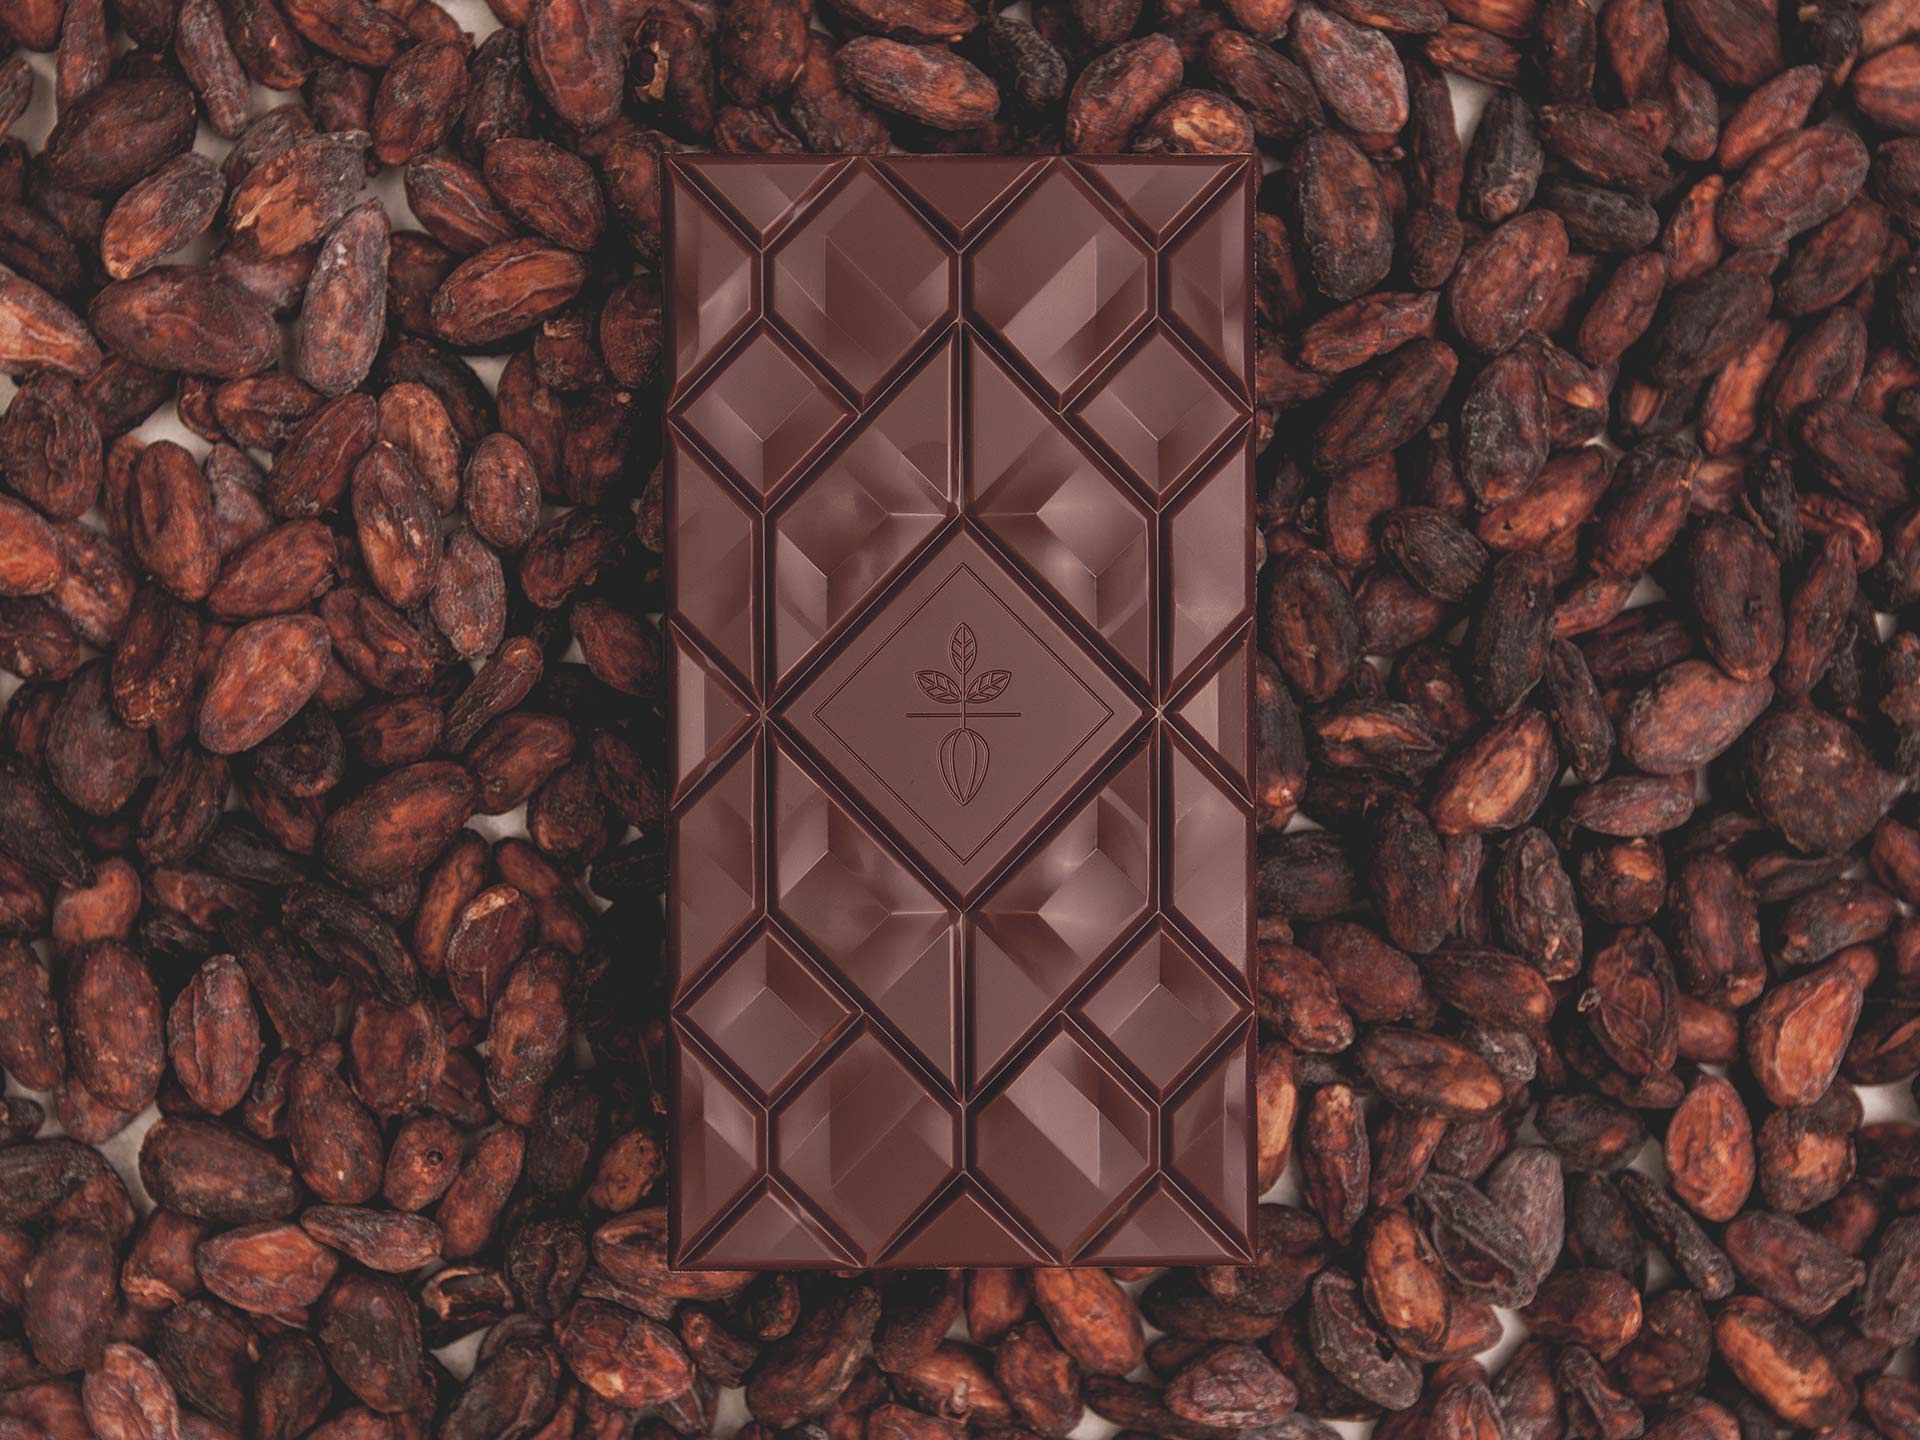 Beau cacao chocolat bean to bar micro batch briancon hautes alpes